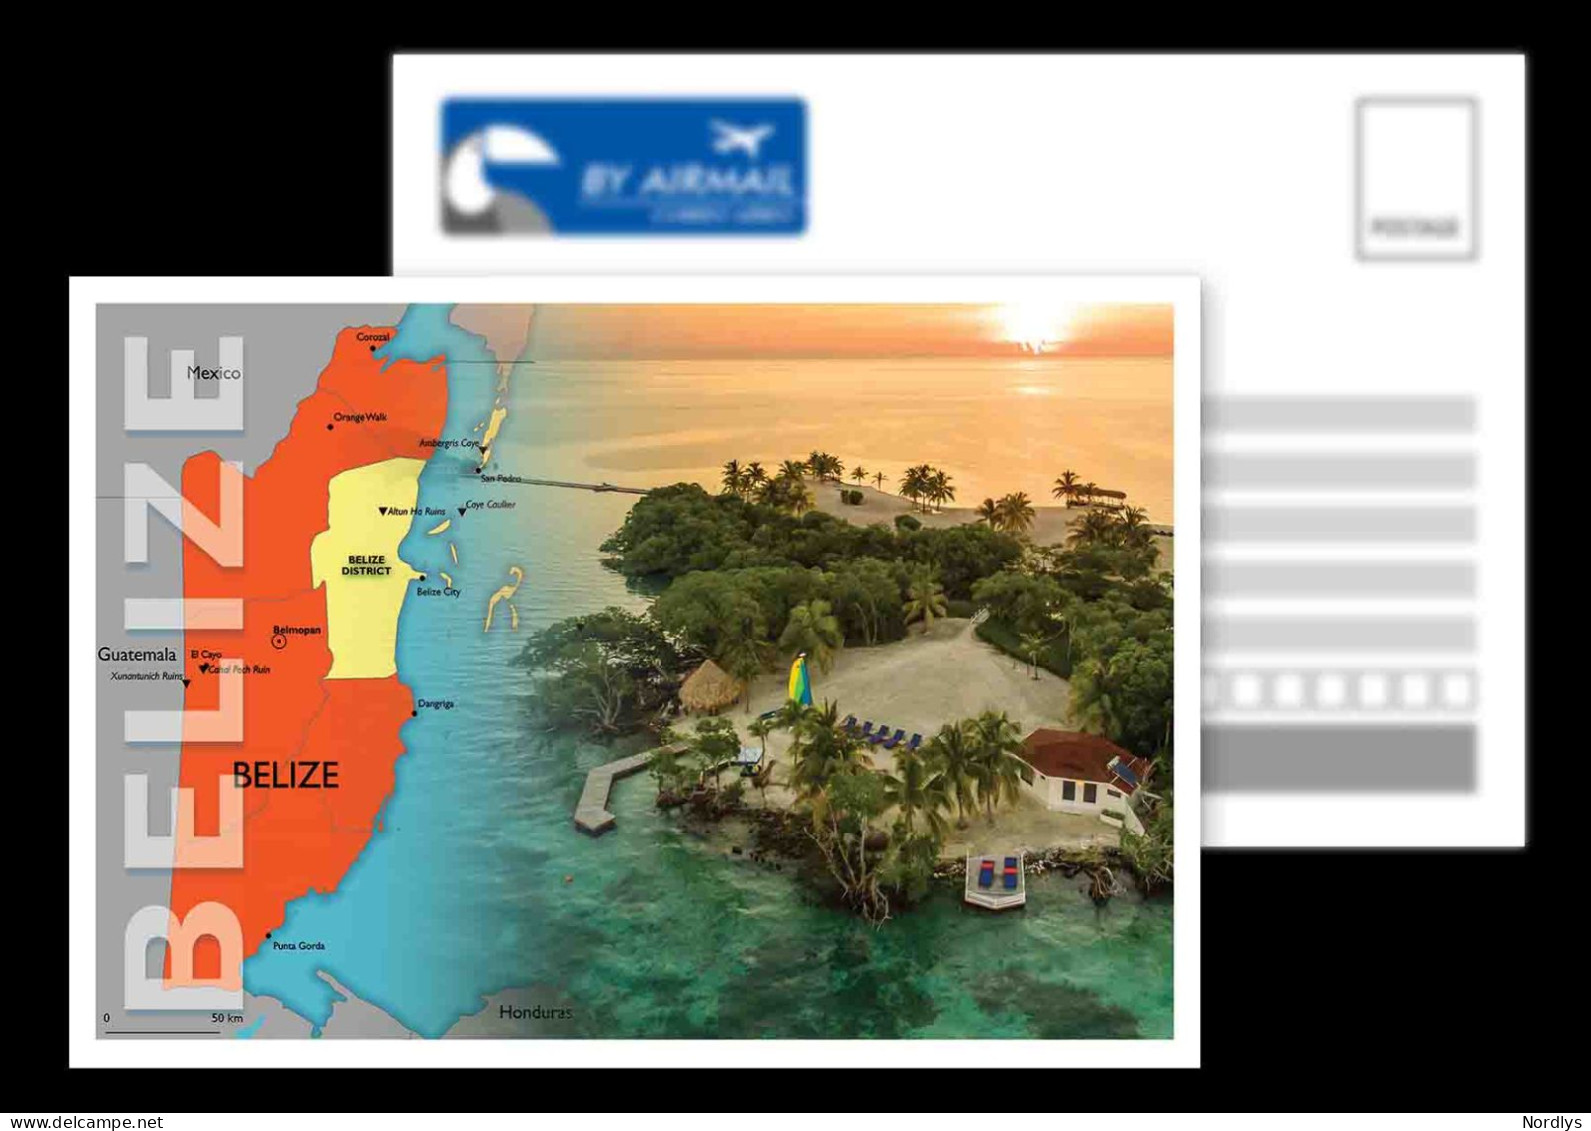 Belize / Postcard / View Card /Map - Belize